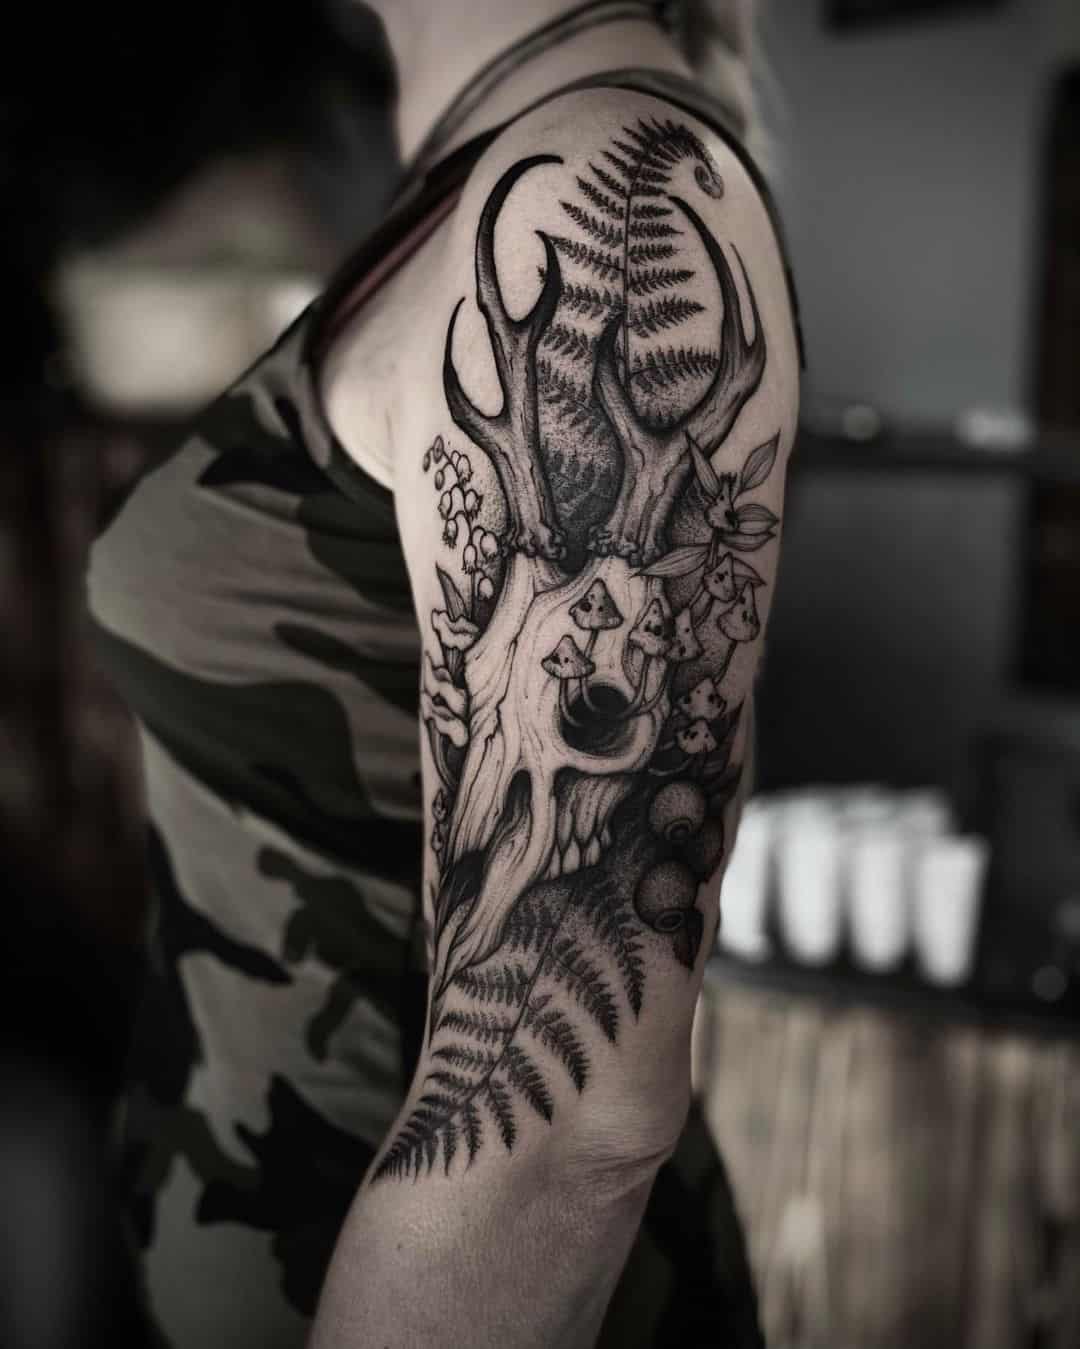 Amazing arm sleeve tattoo by siemka tattoo